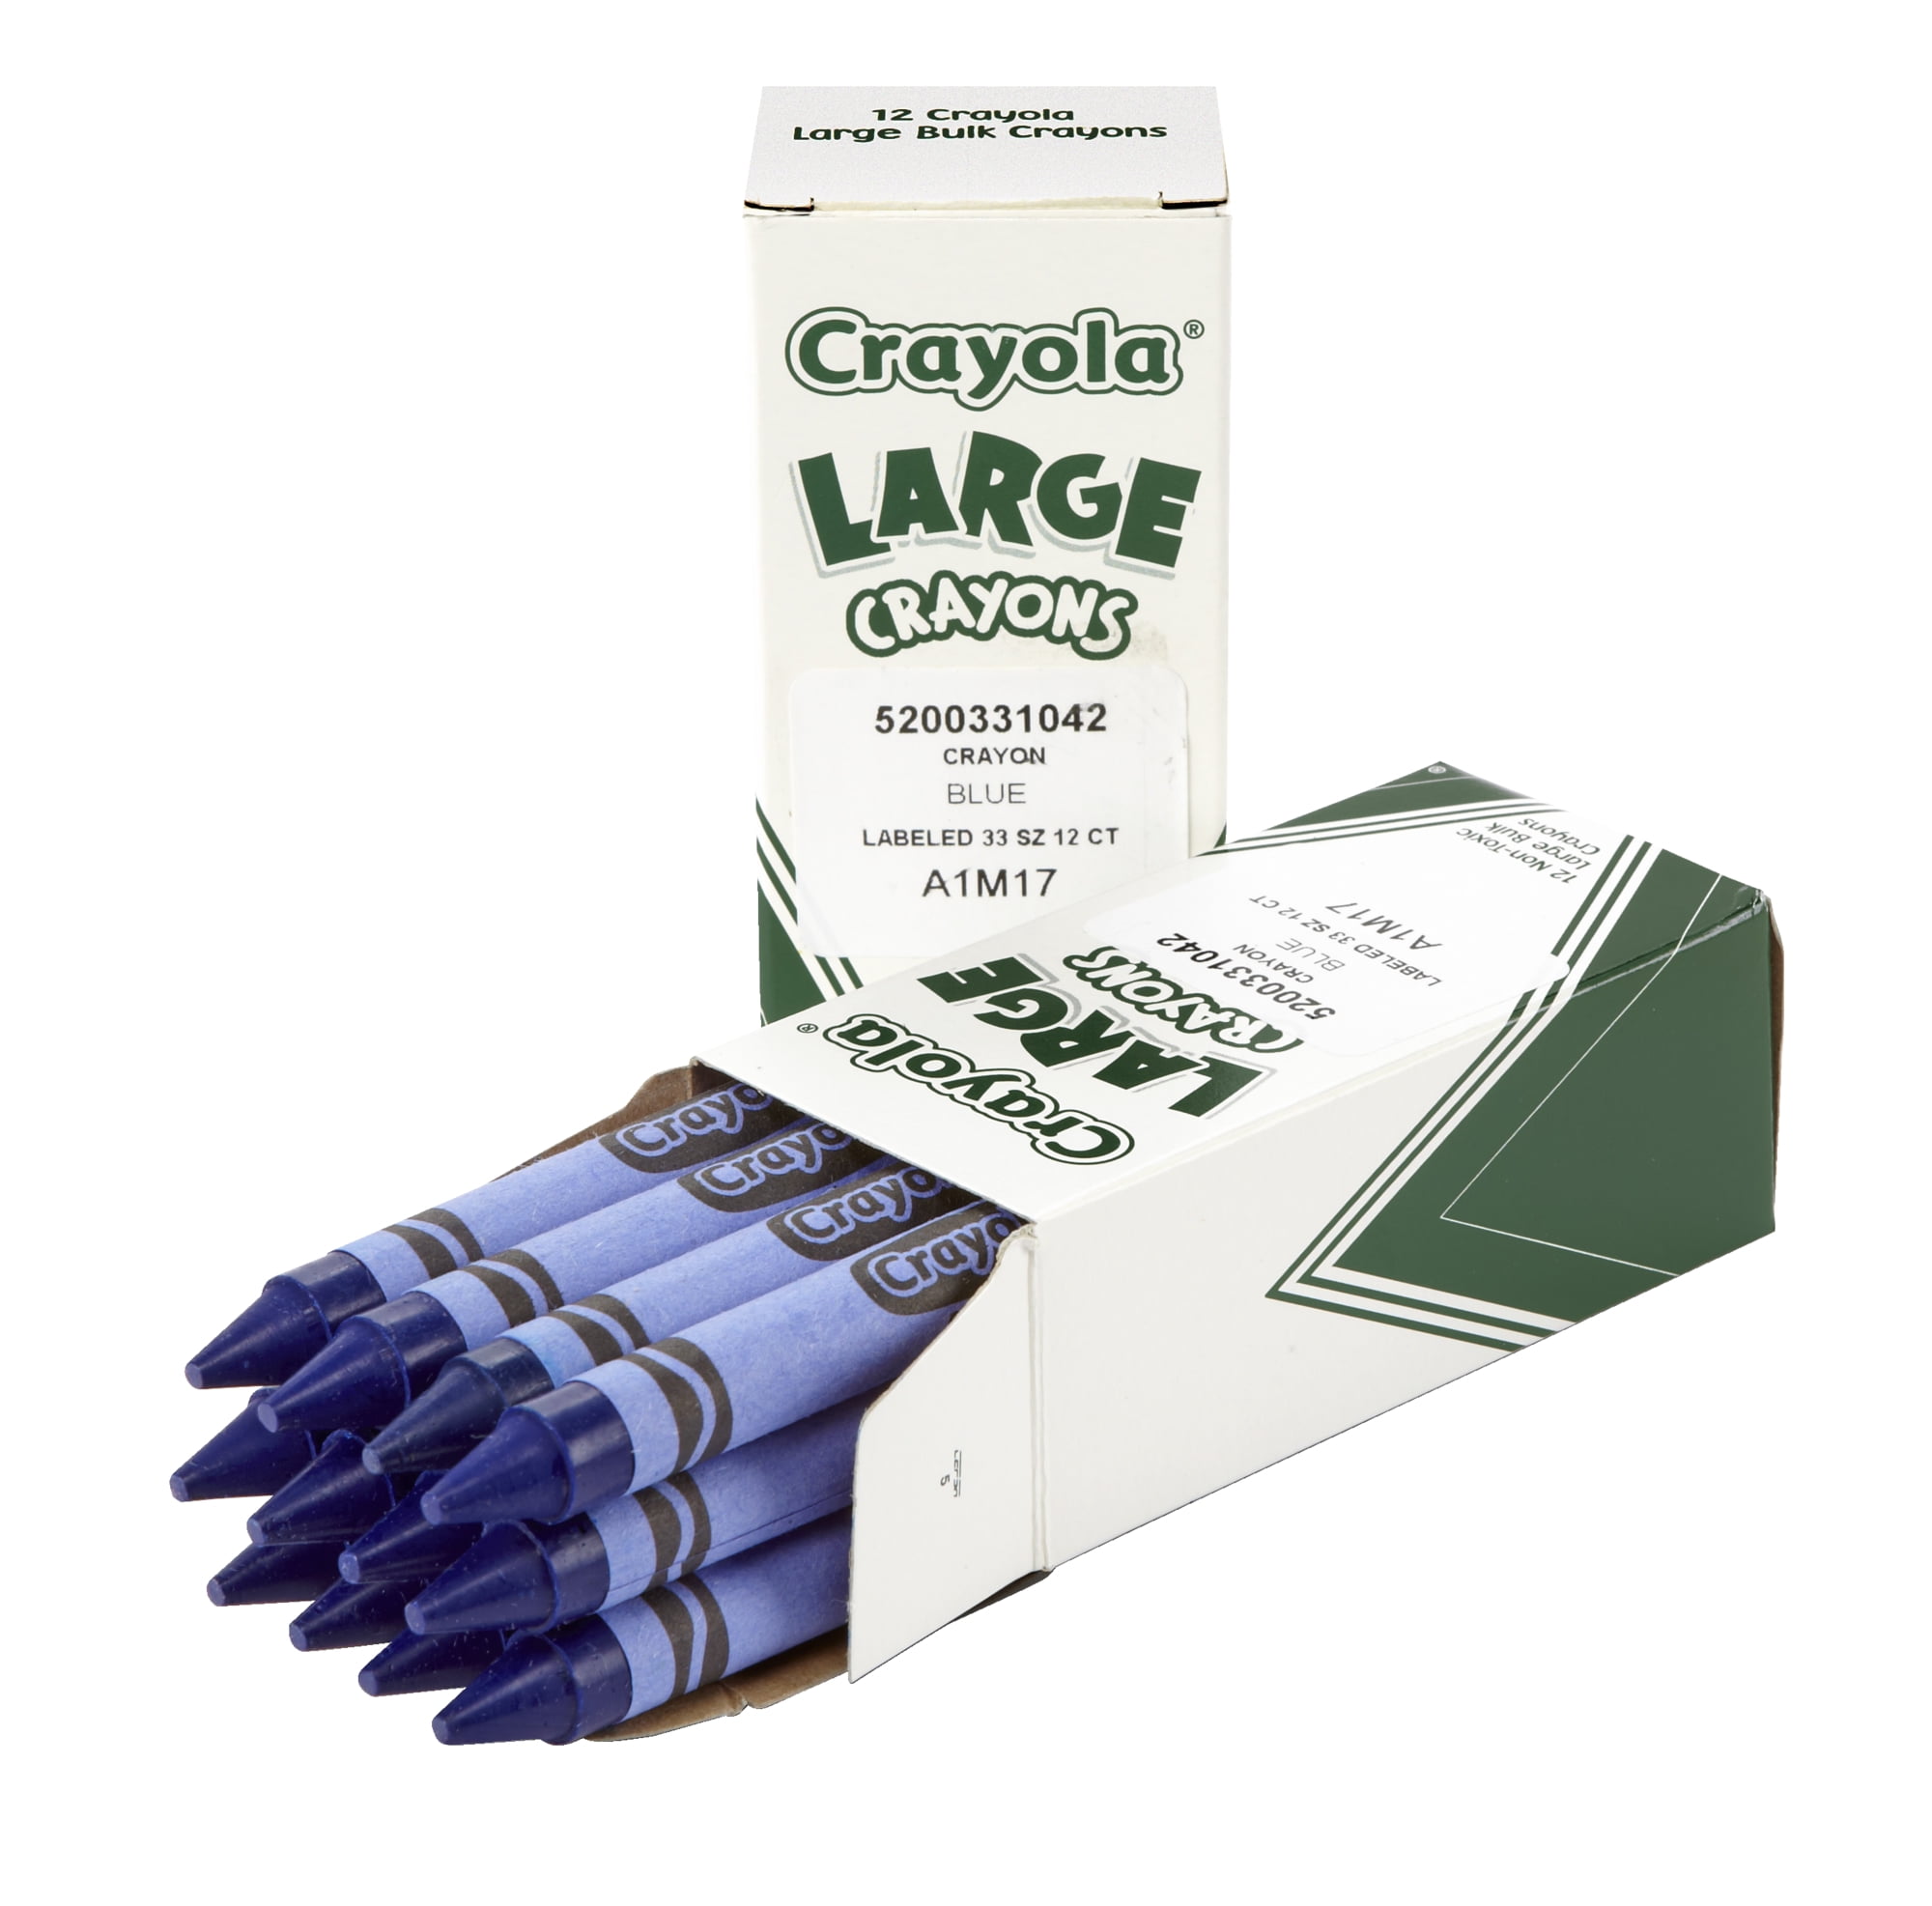 Crayola Crayons Bulk Refill - Large Size, Box of 12, Green 52-0033-44